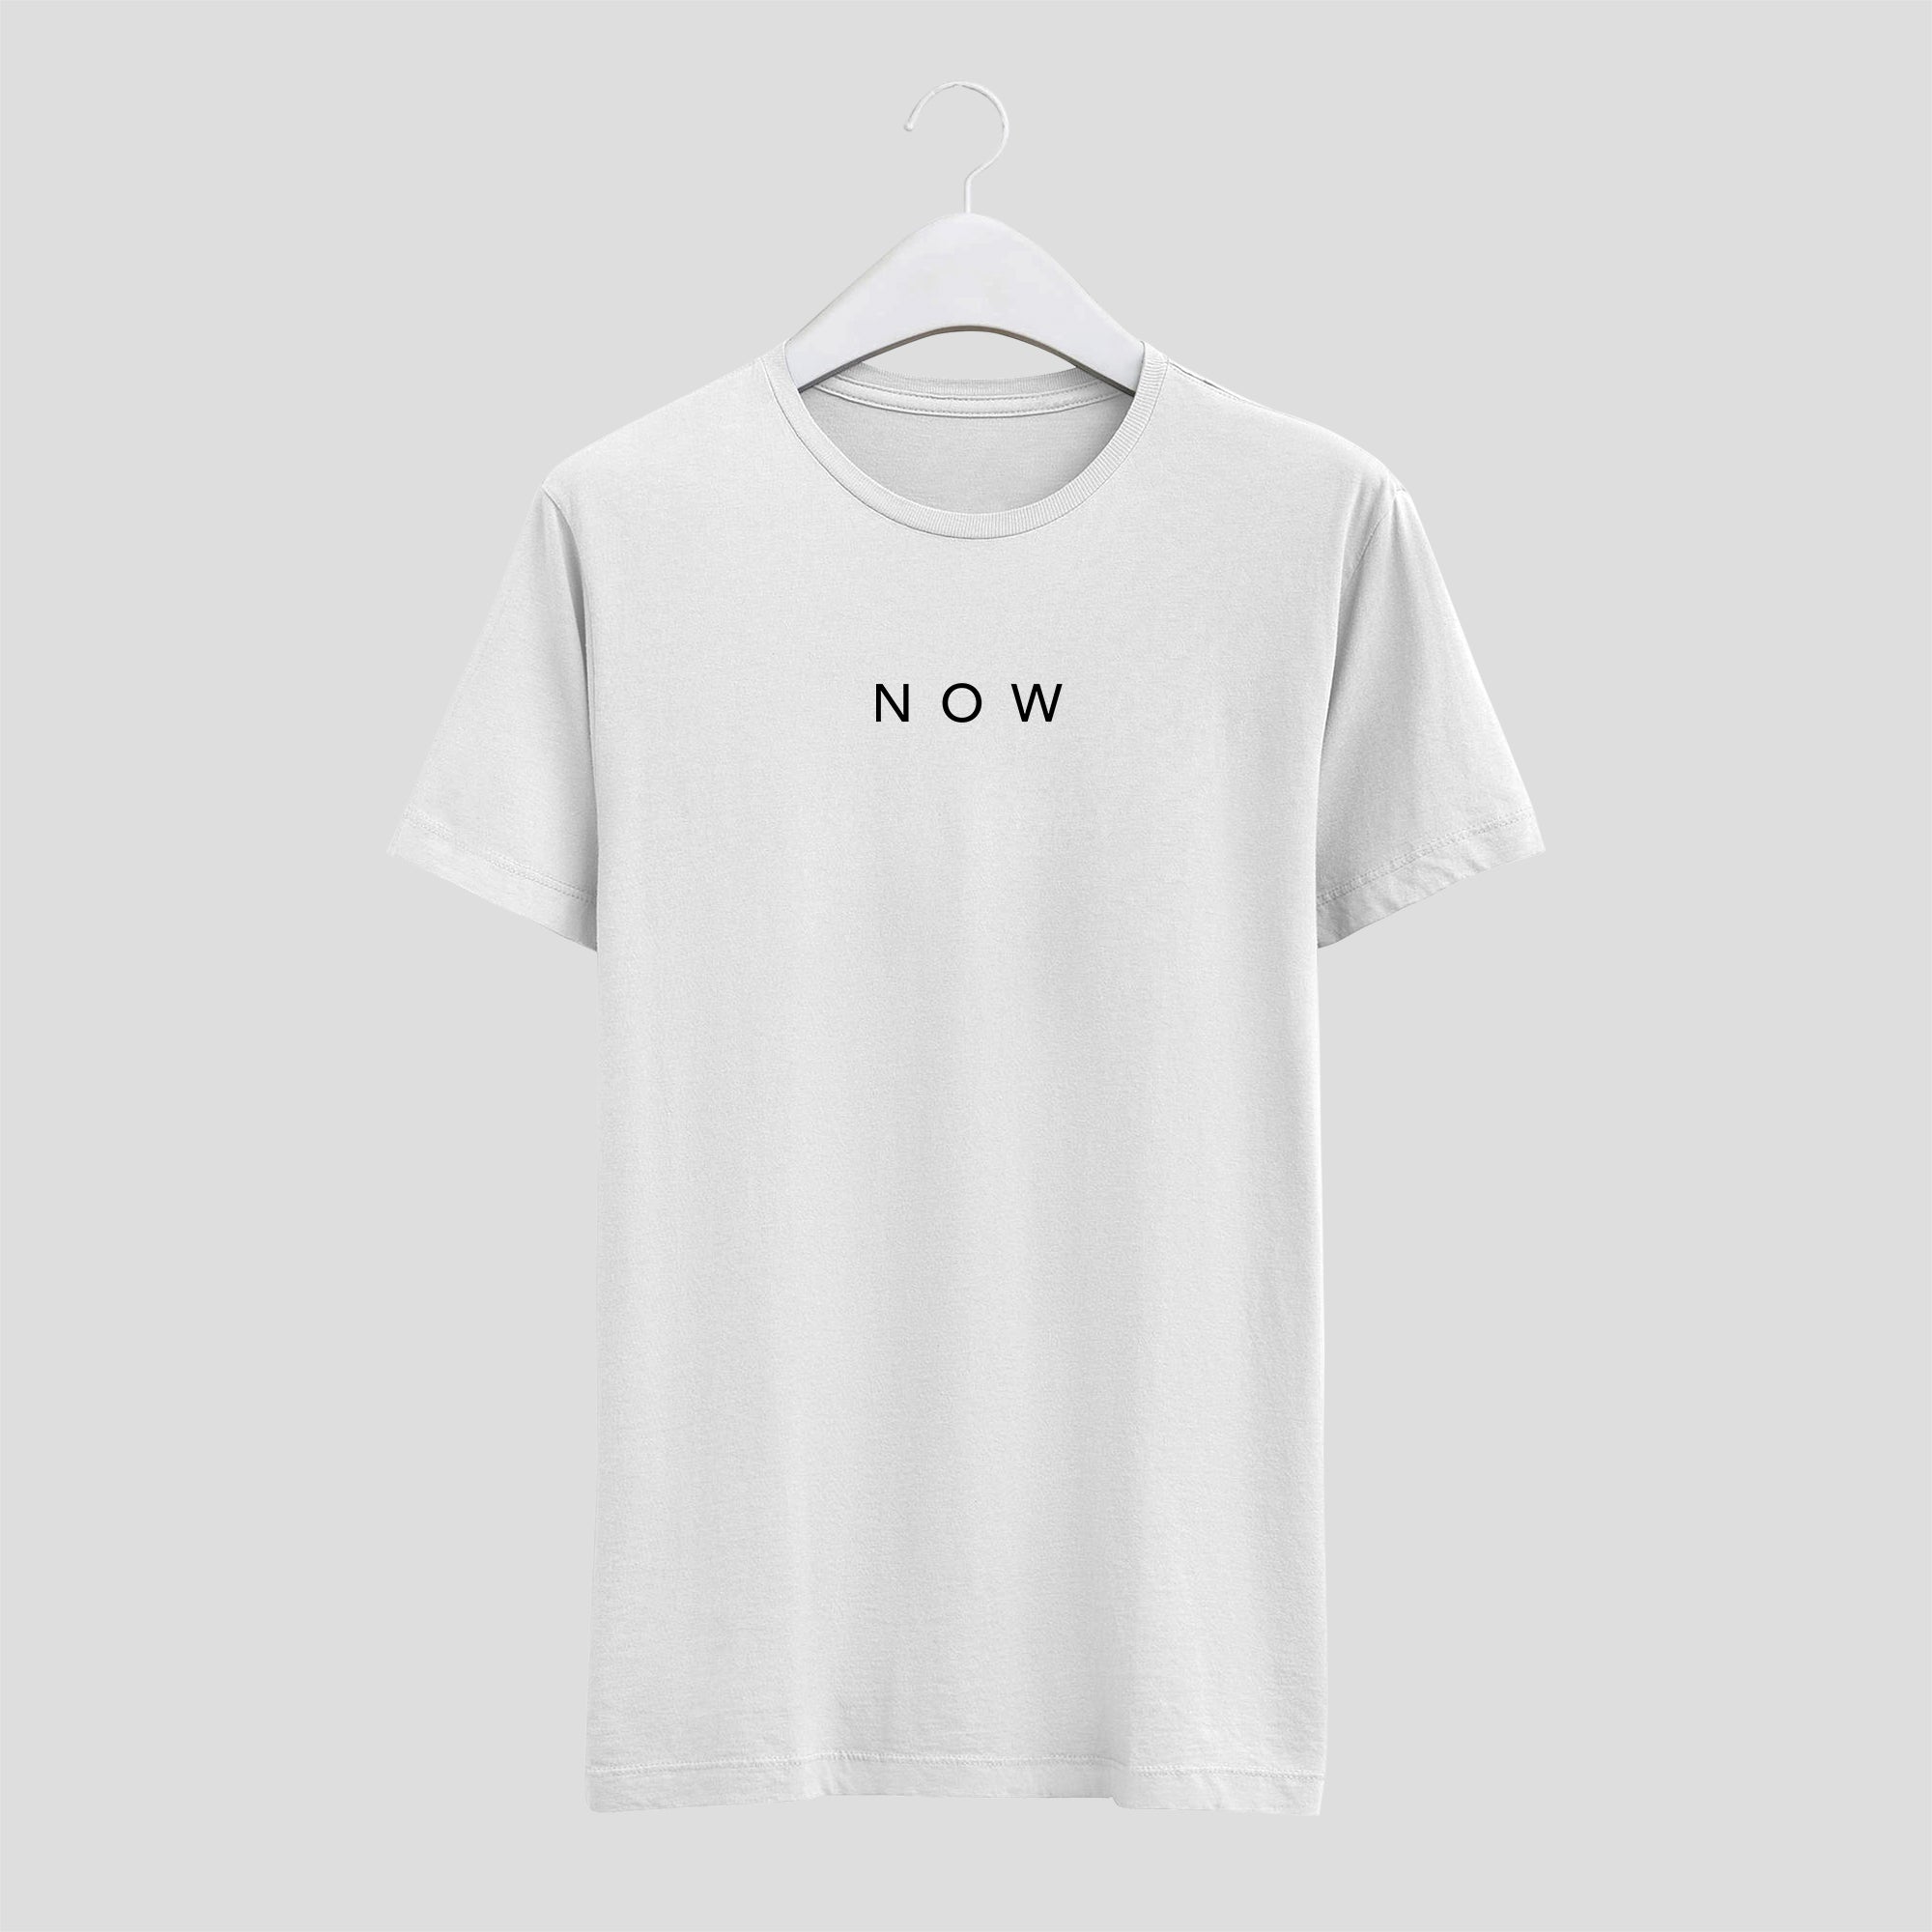 camiseta mindfullness minimalista now blanca hombre